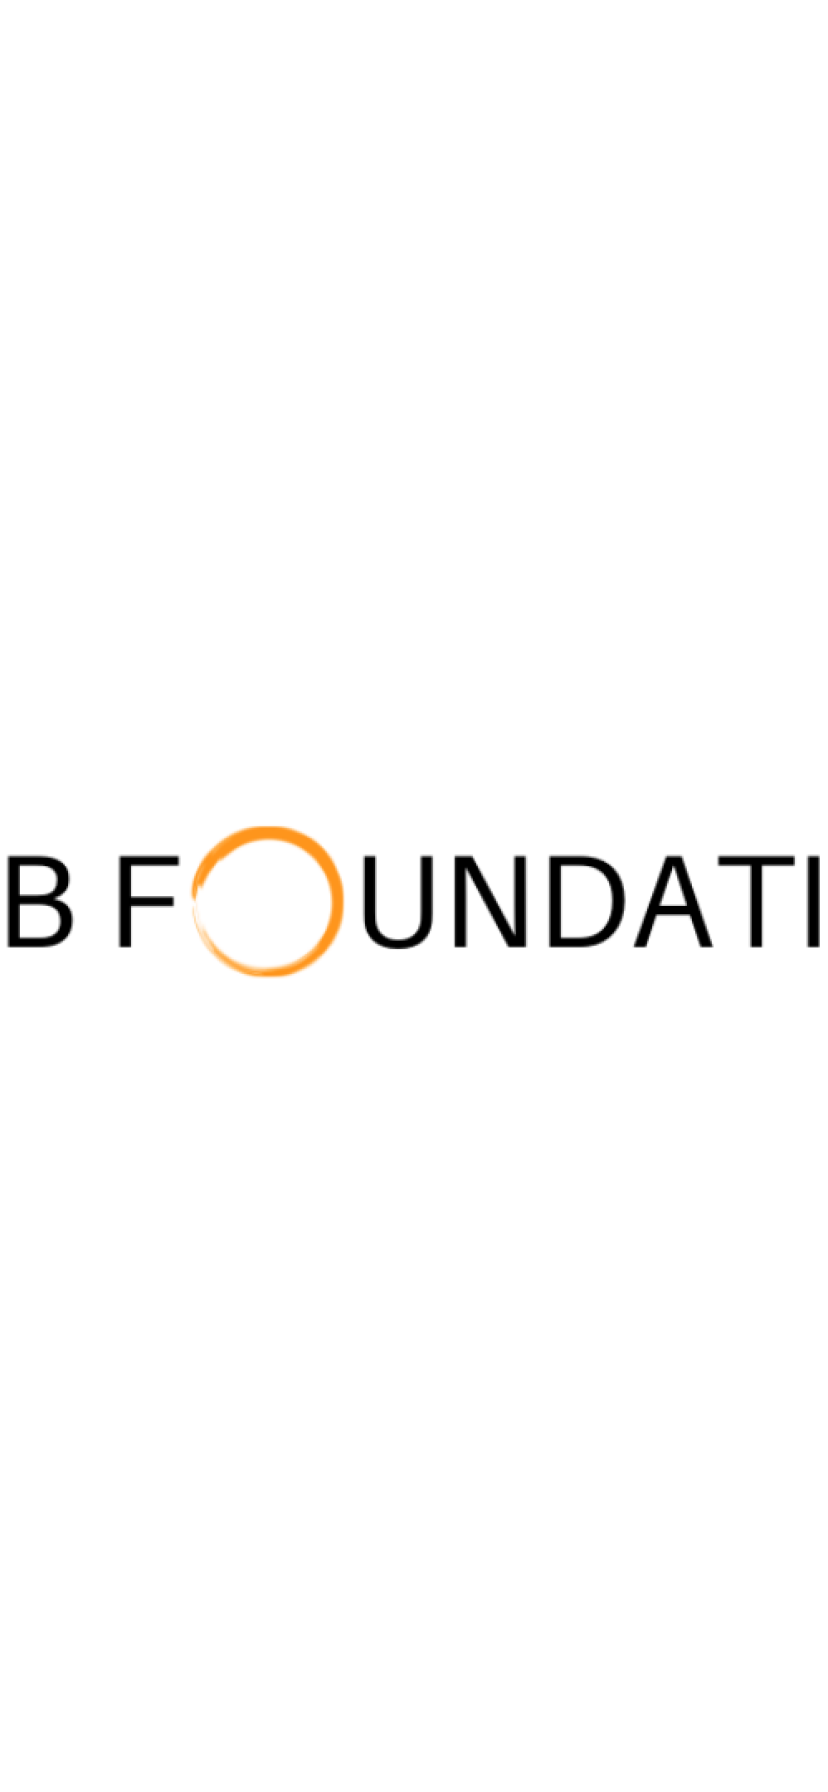 Hubfoundation.org domain name for sale